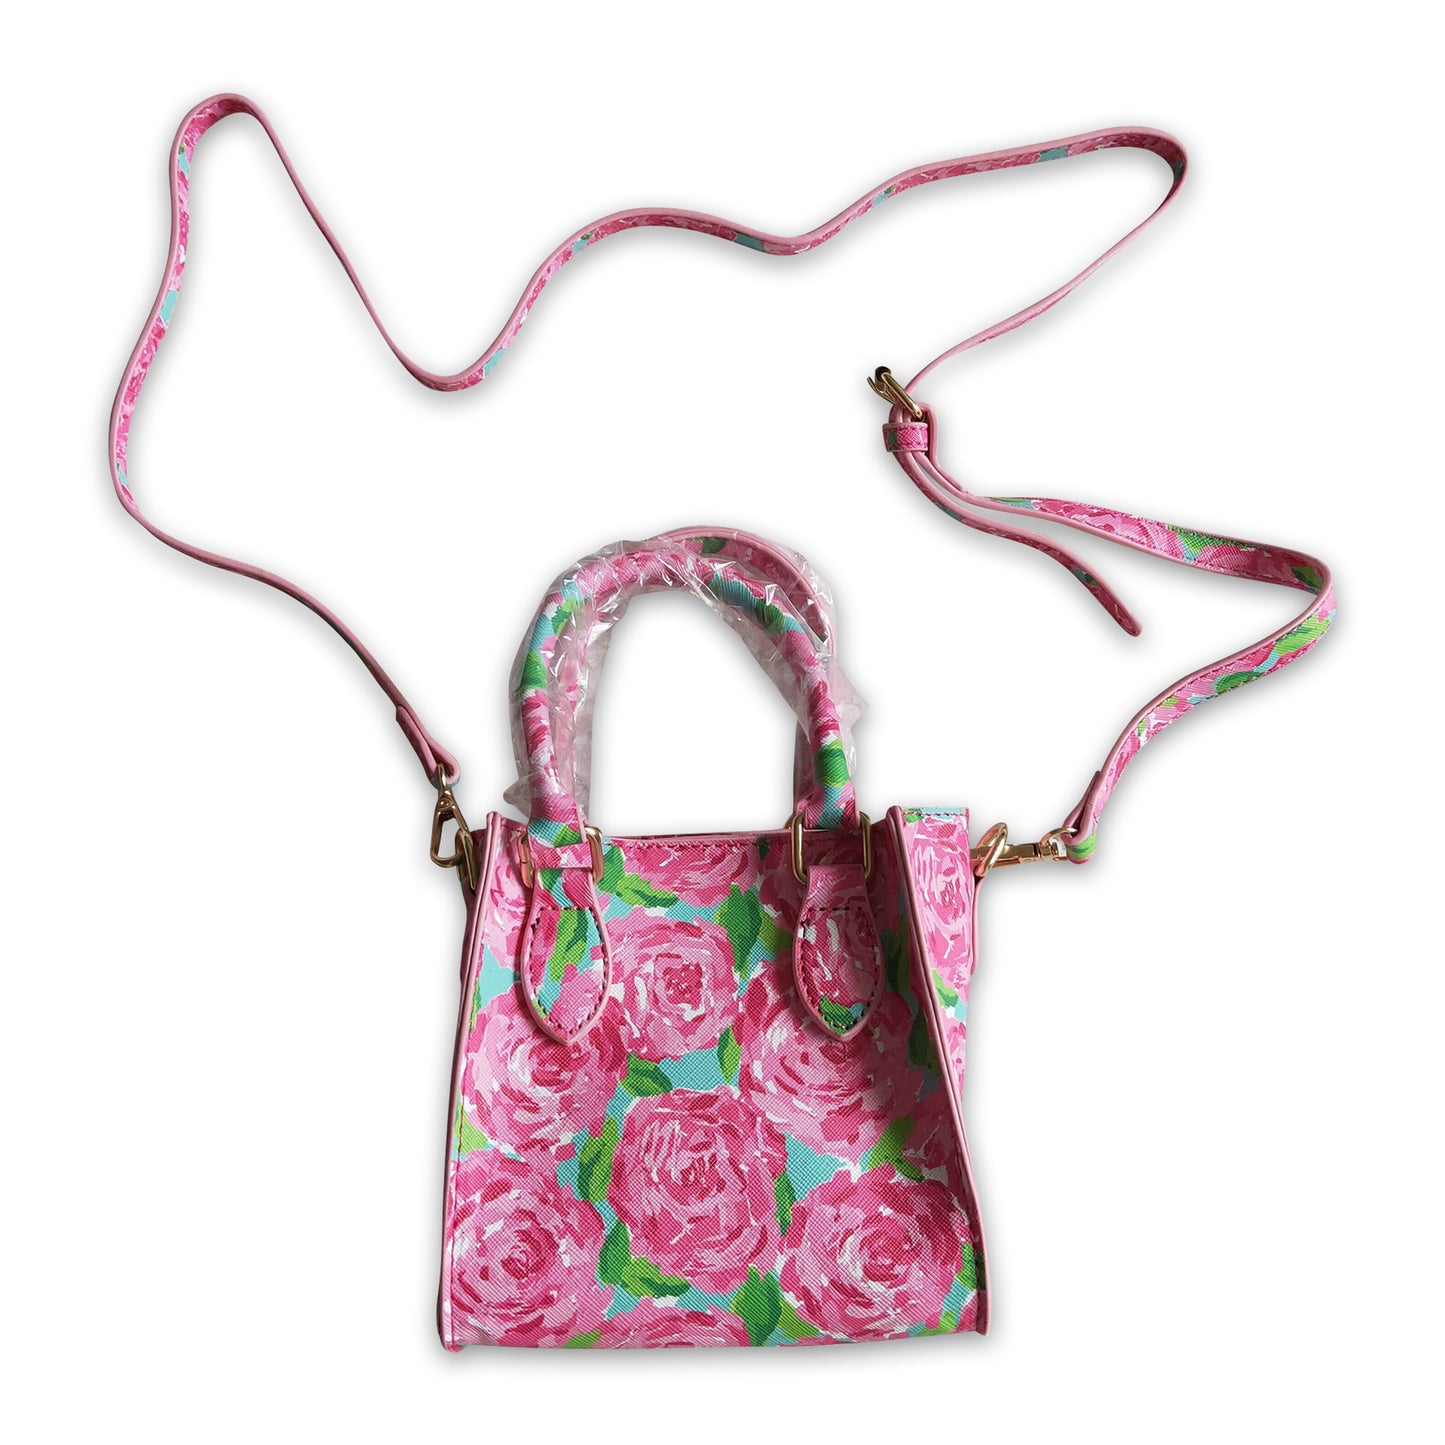 Hot pink floral kids girls bags